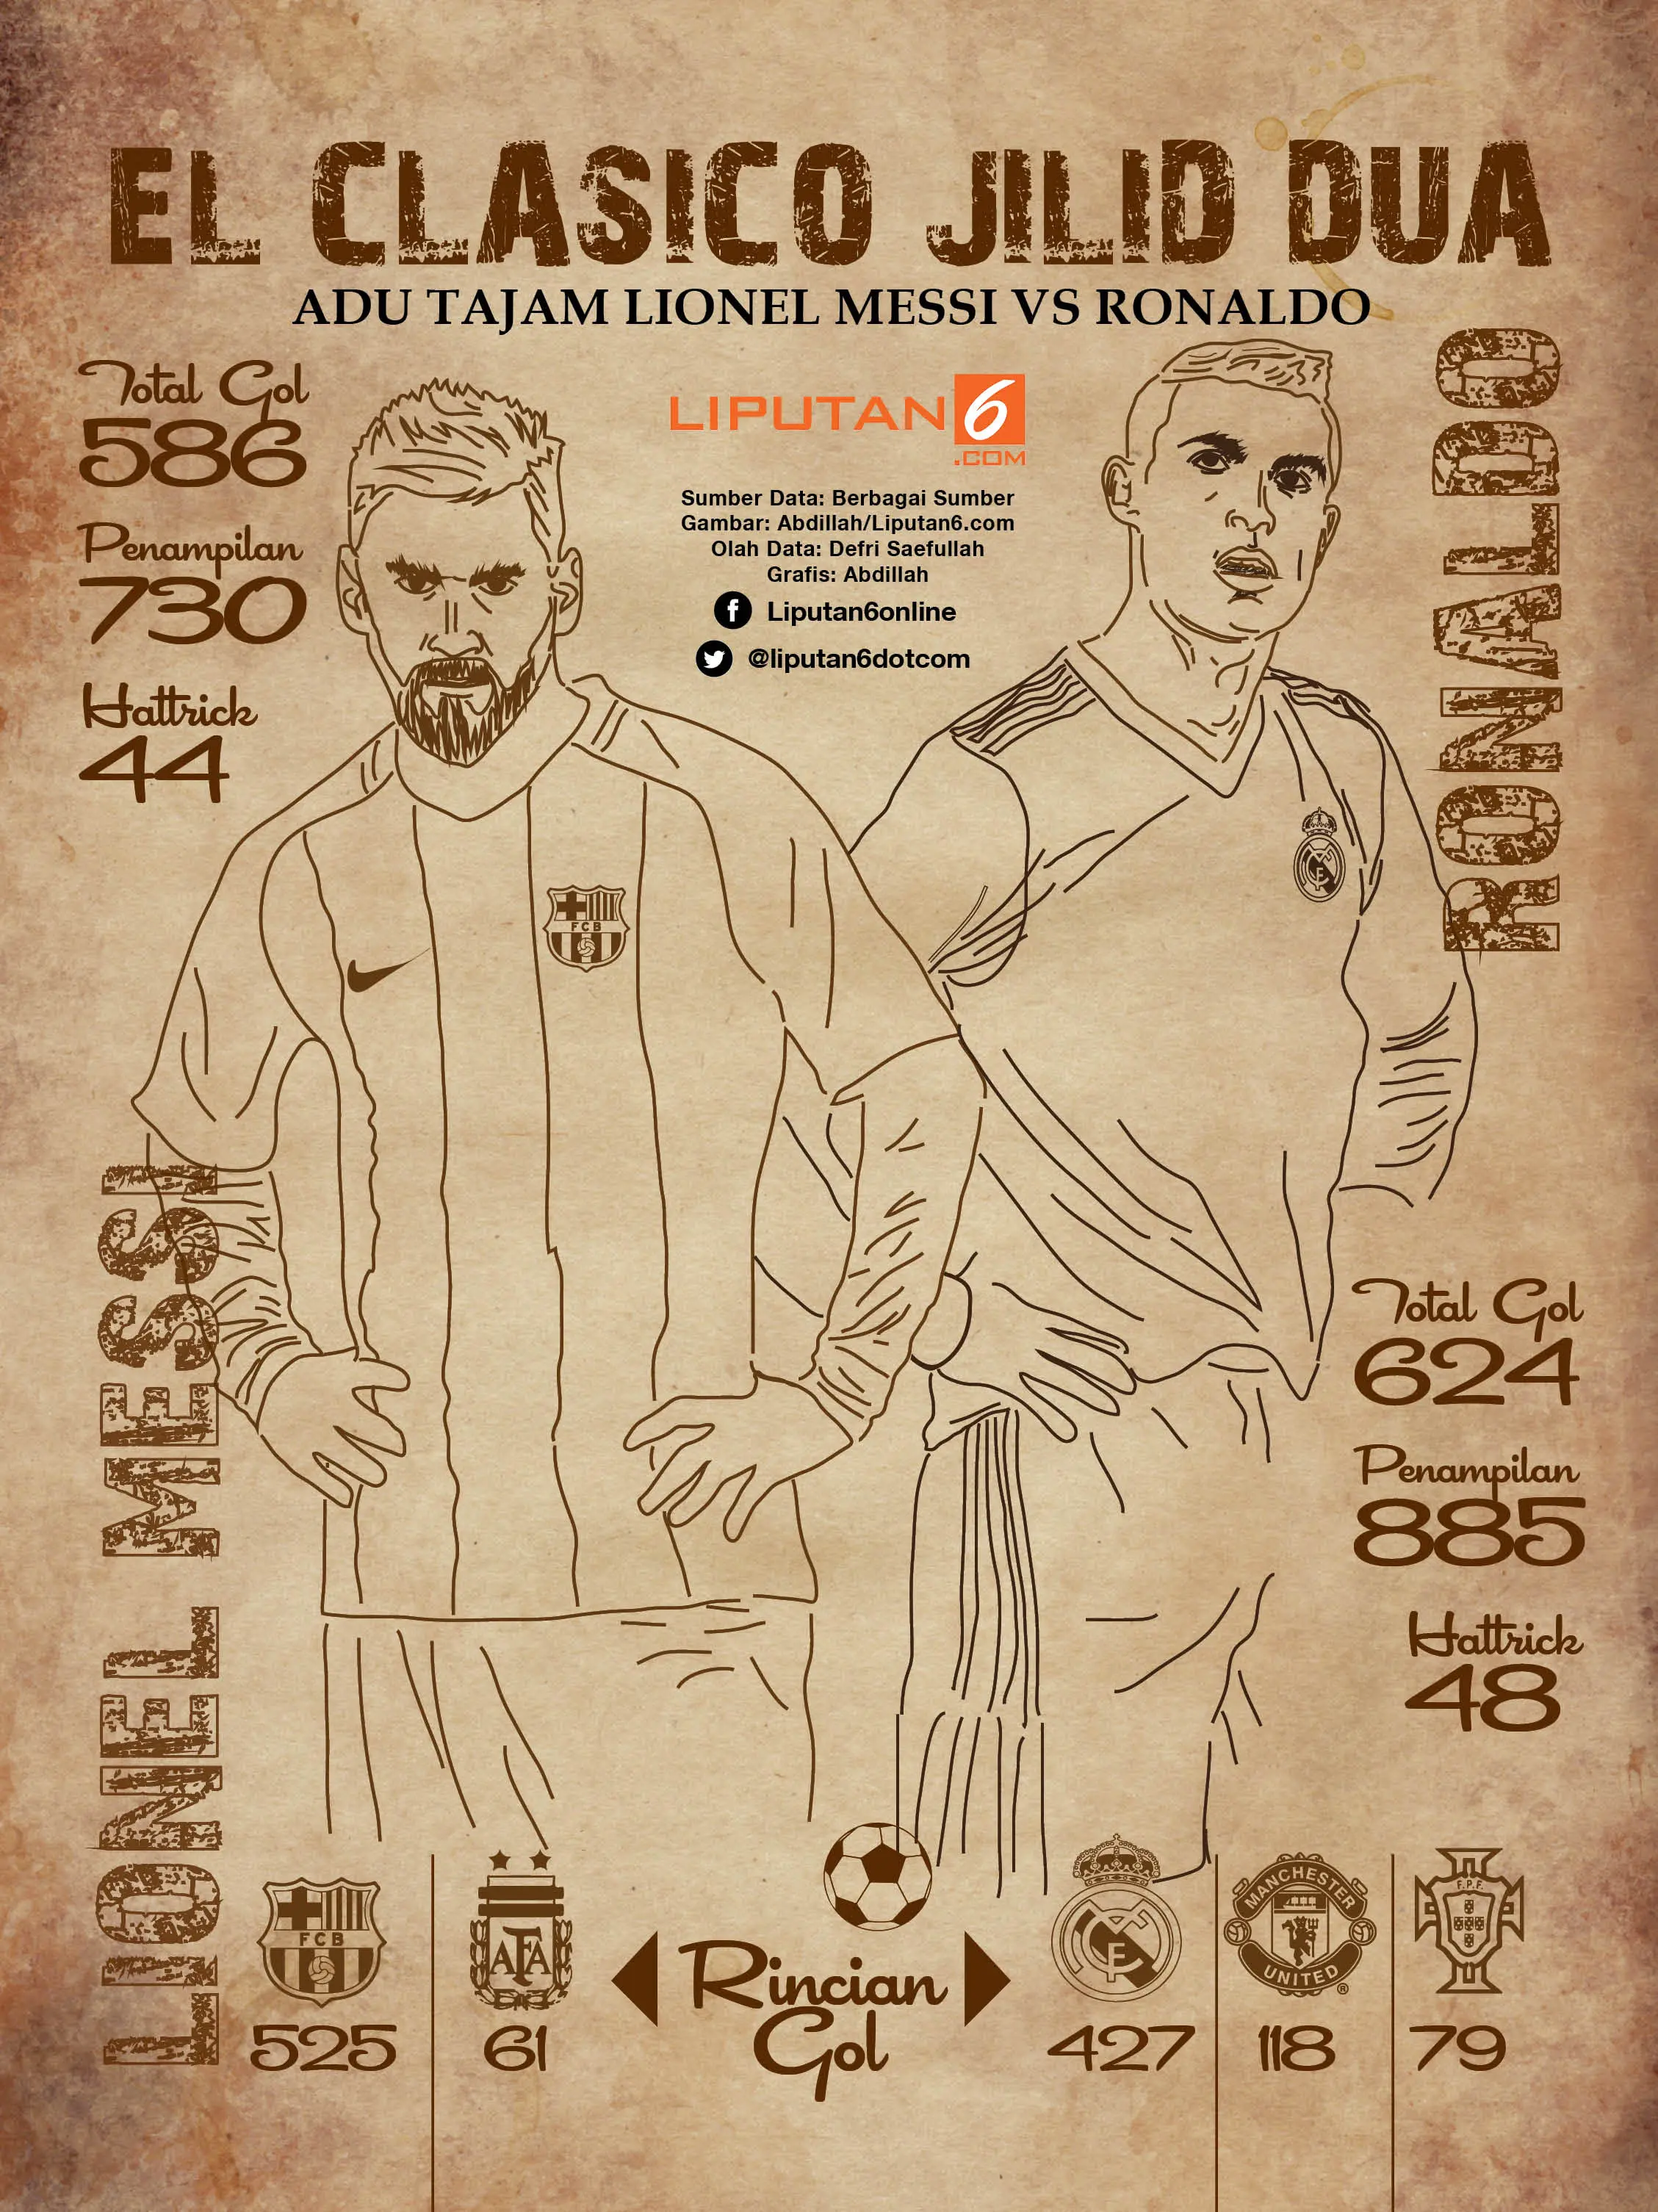 Infografis duel Messi vs Ronaldo di El Clasico jilid dua